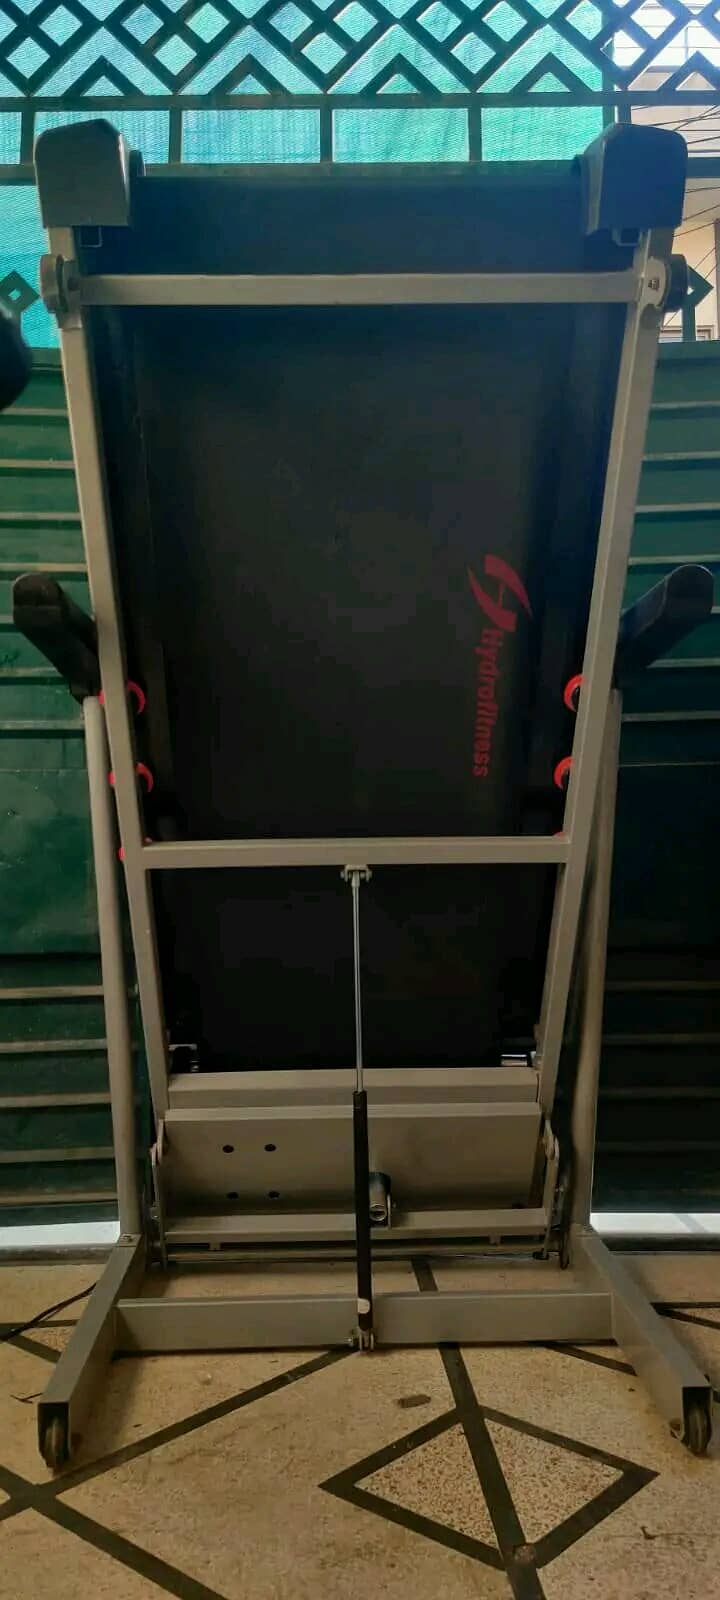 Hydro fitness treadmill for sale 0316/1736/128 whatsapp 10